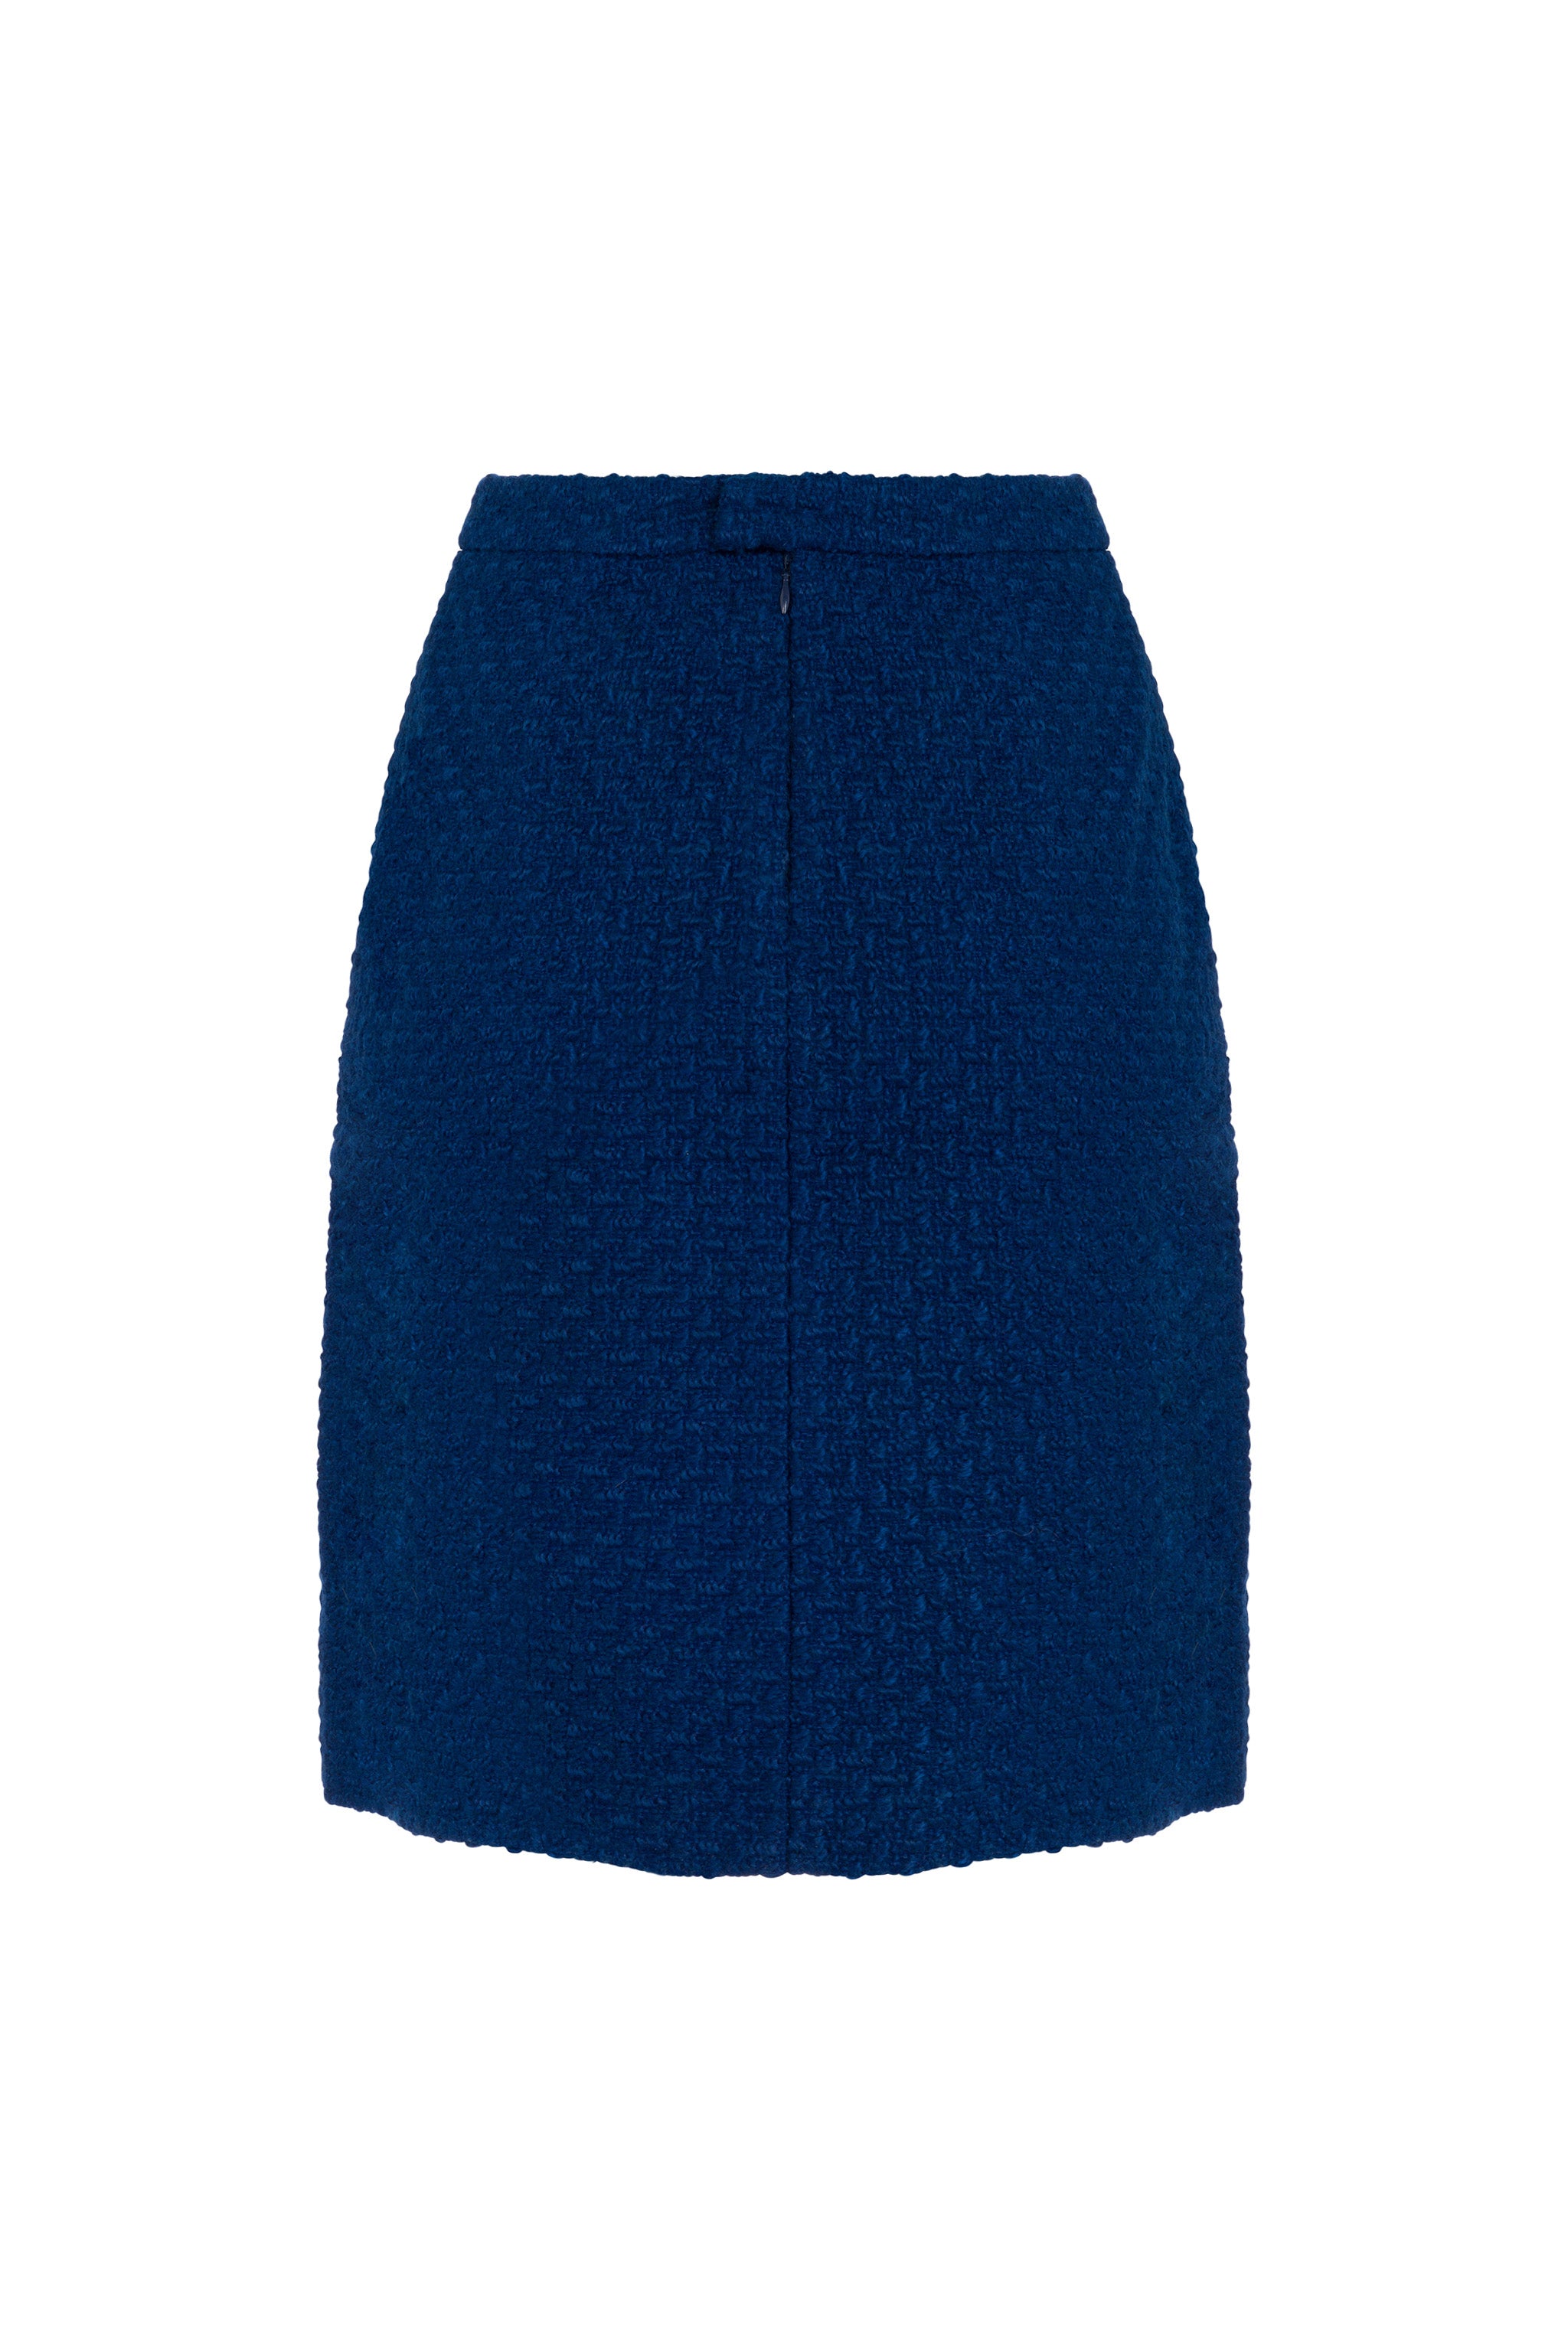 Classic Tweed Skirt (Royal)